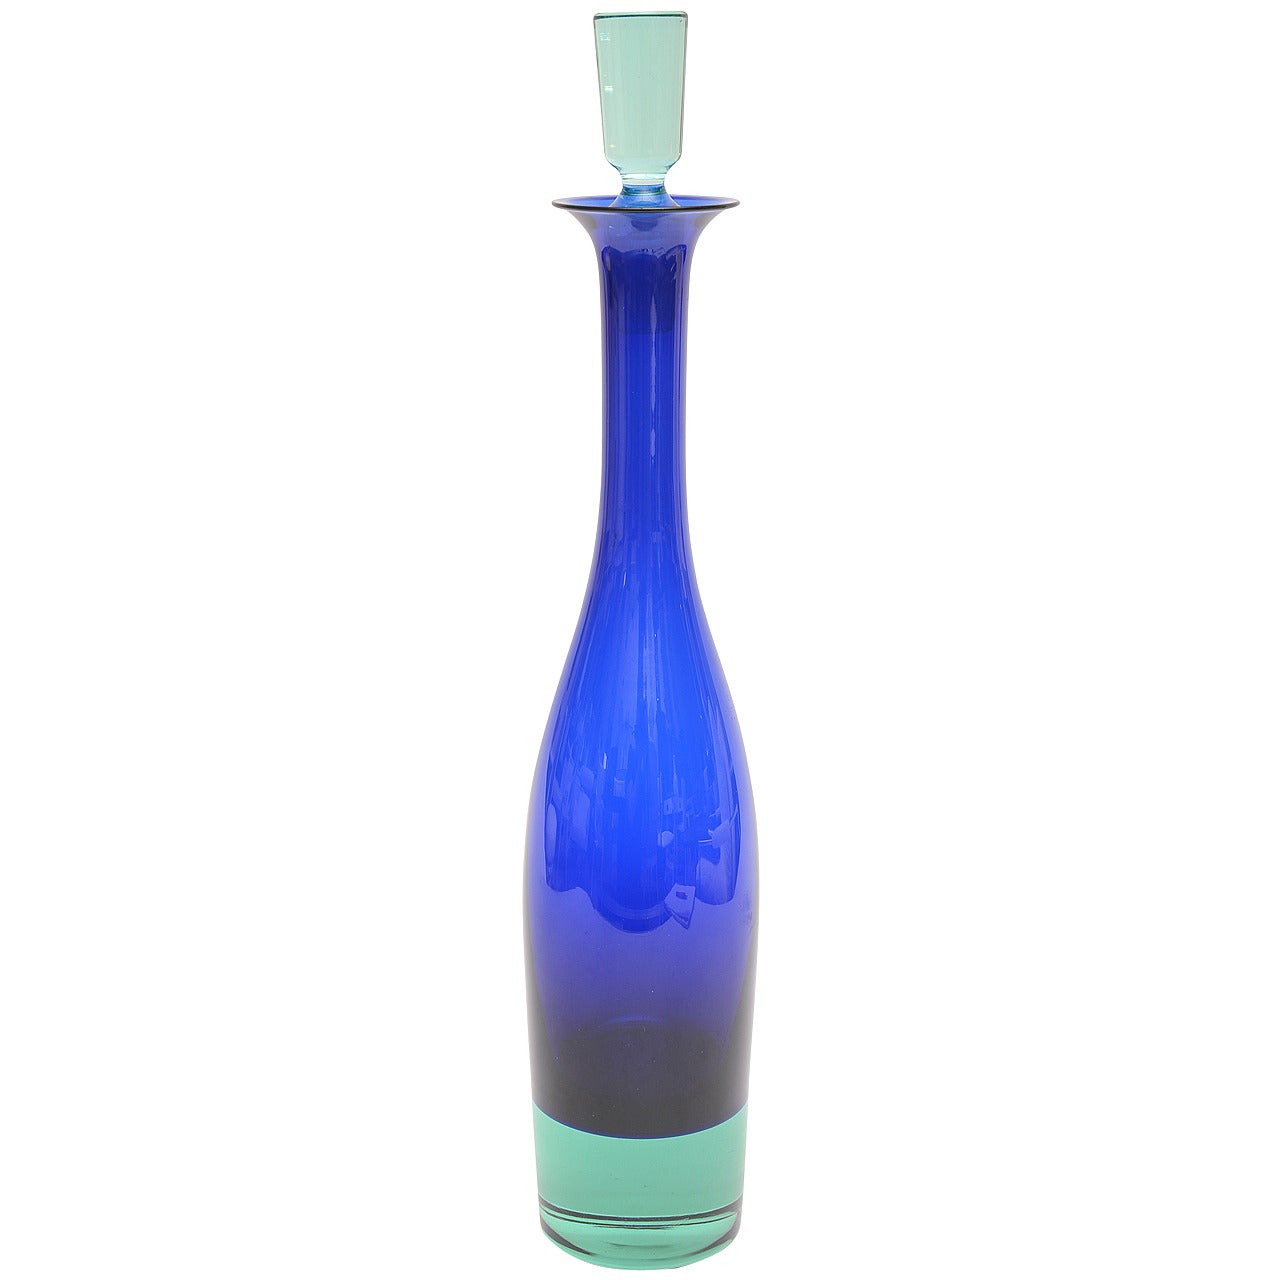 Anje Kjaer for Holmegaard Sommerso Glass Bottle/ Decanter